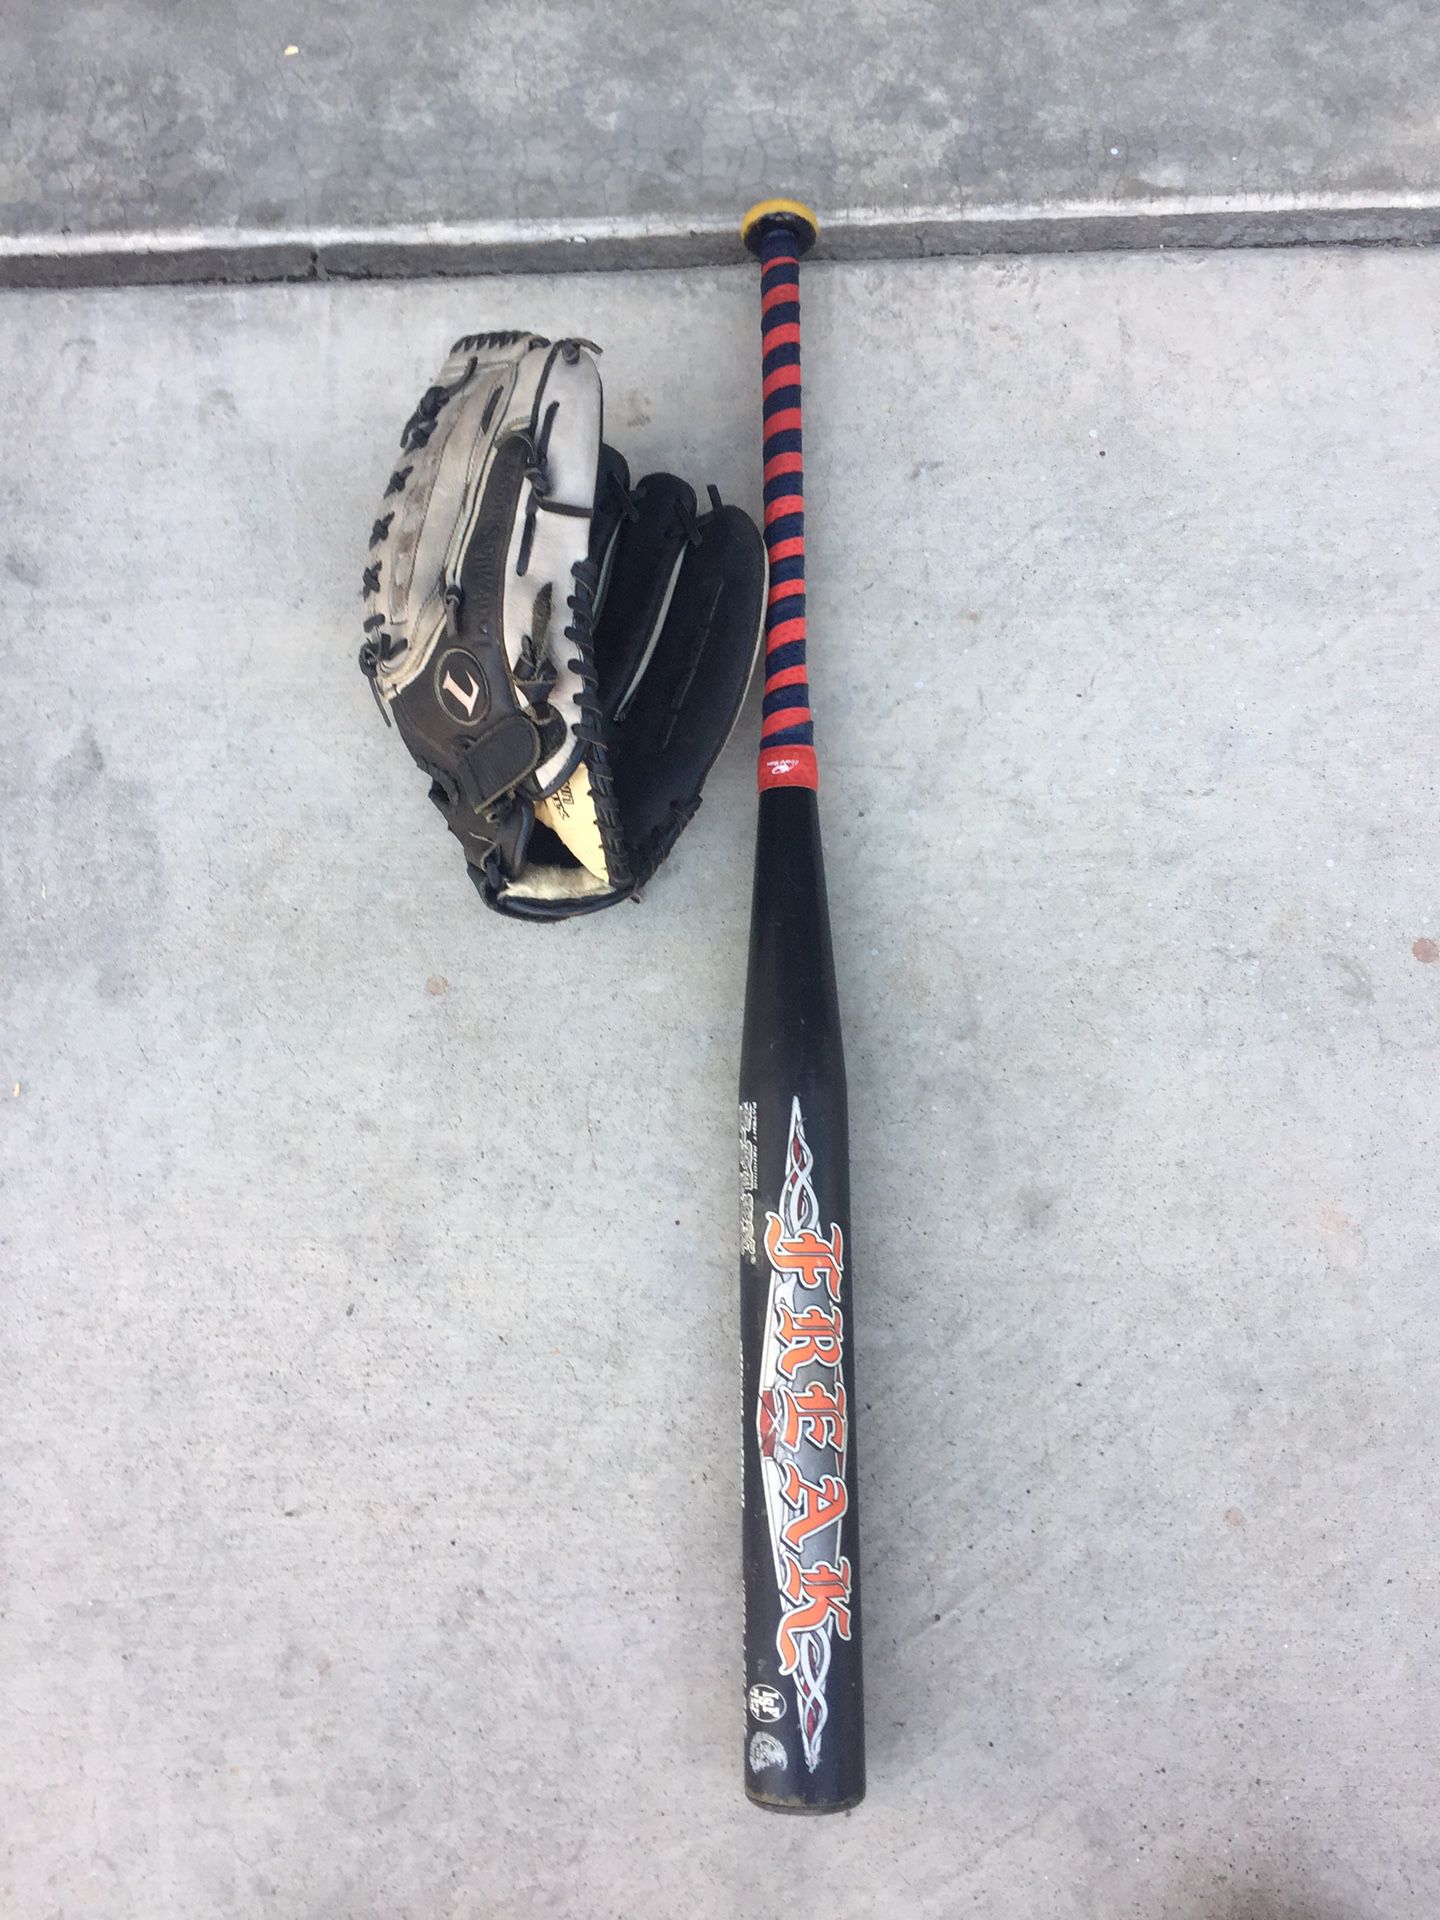 Miken Freak, softball bat, 34”x 26oz - $75, Louisville Slugger glove- $35, or $100 for both!